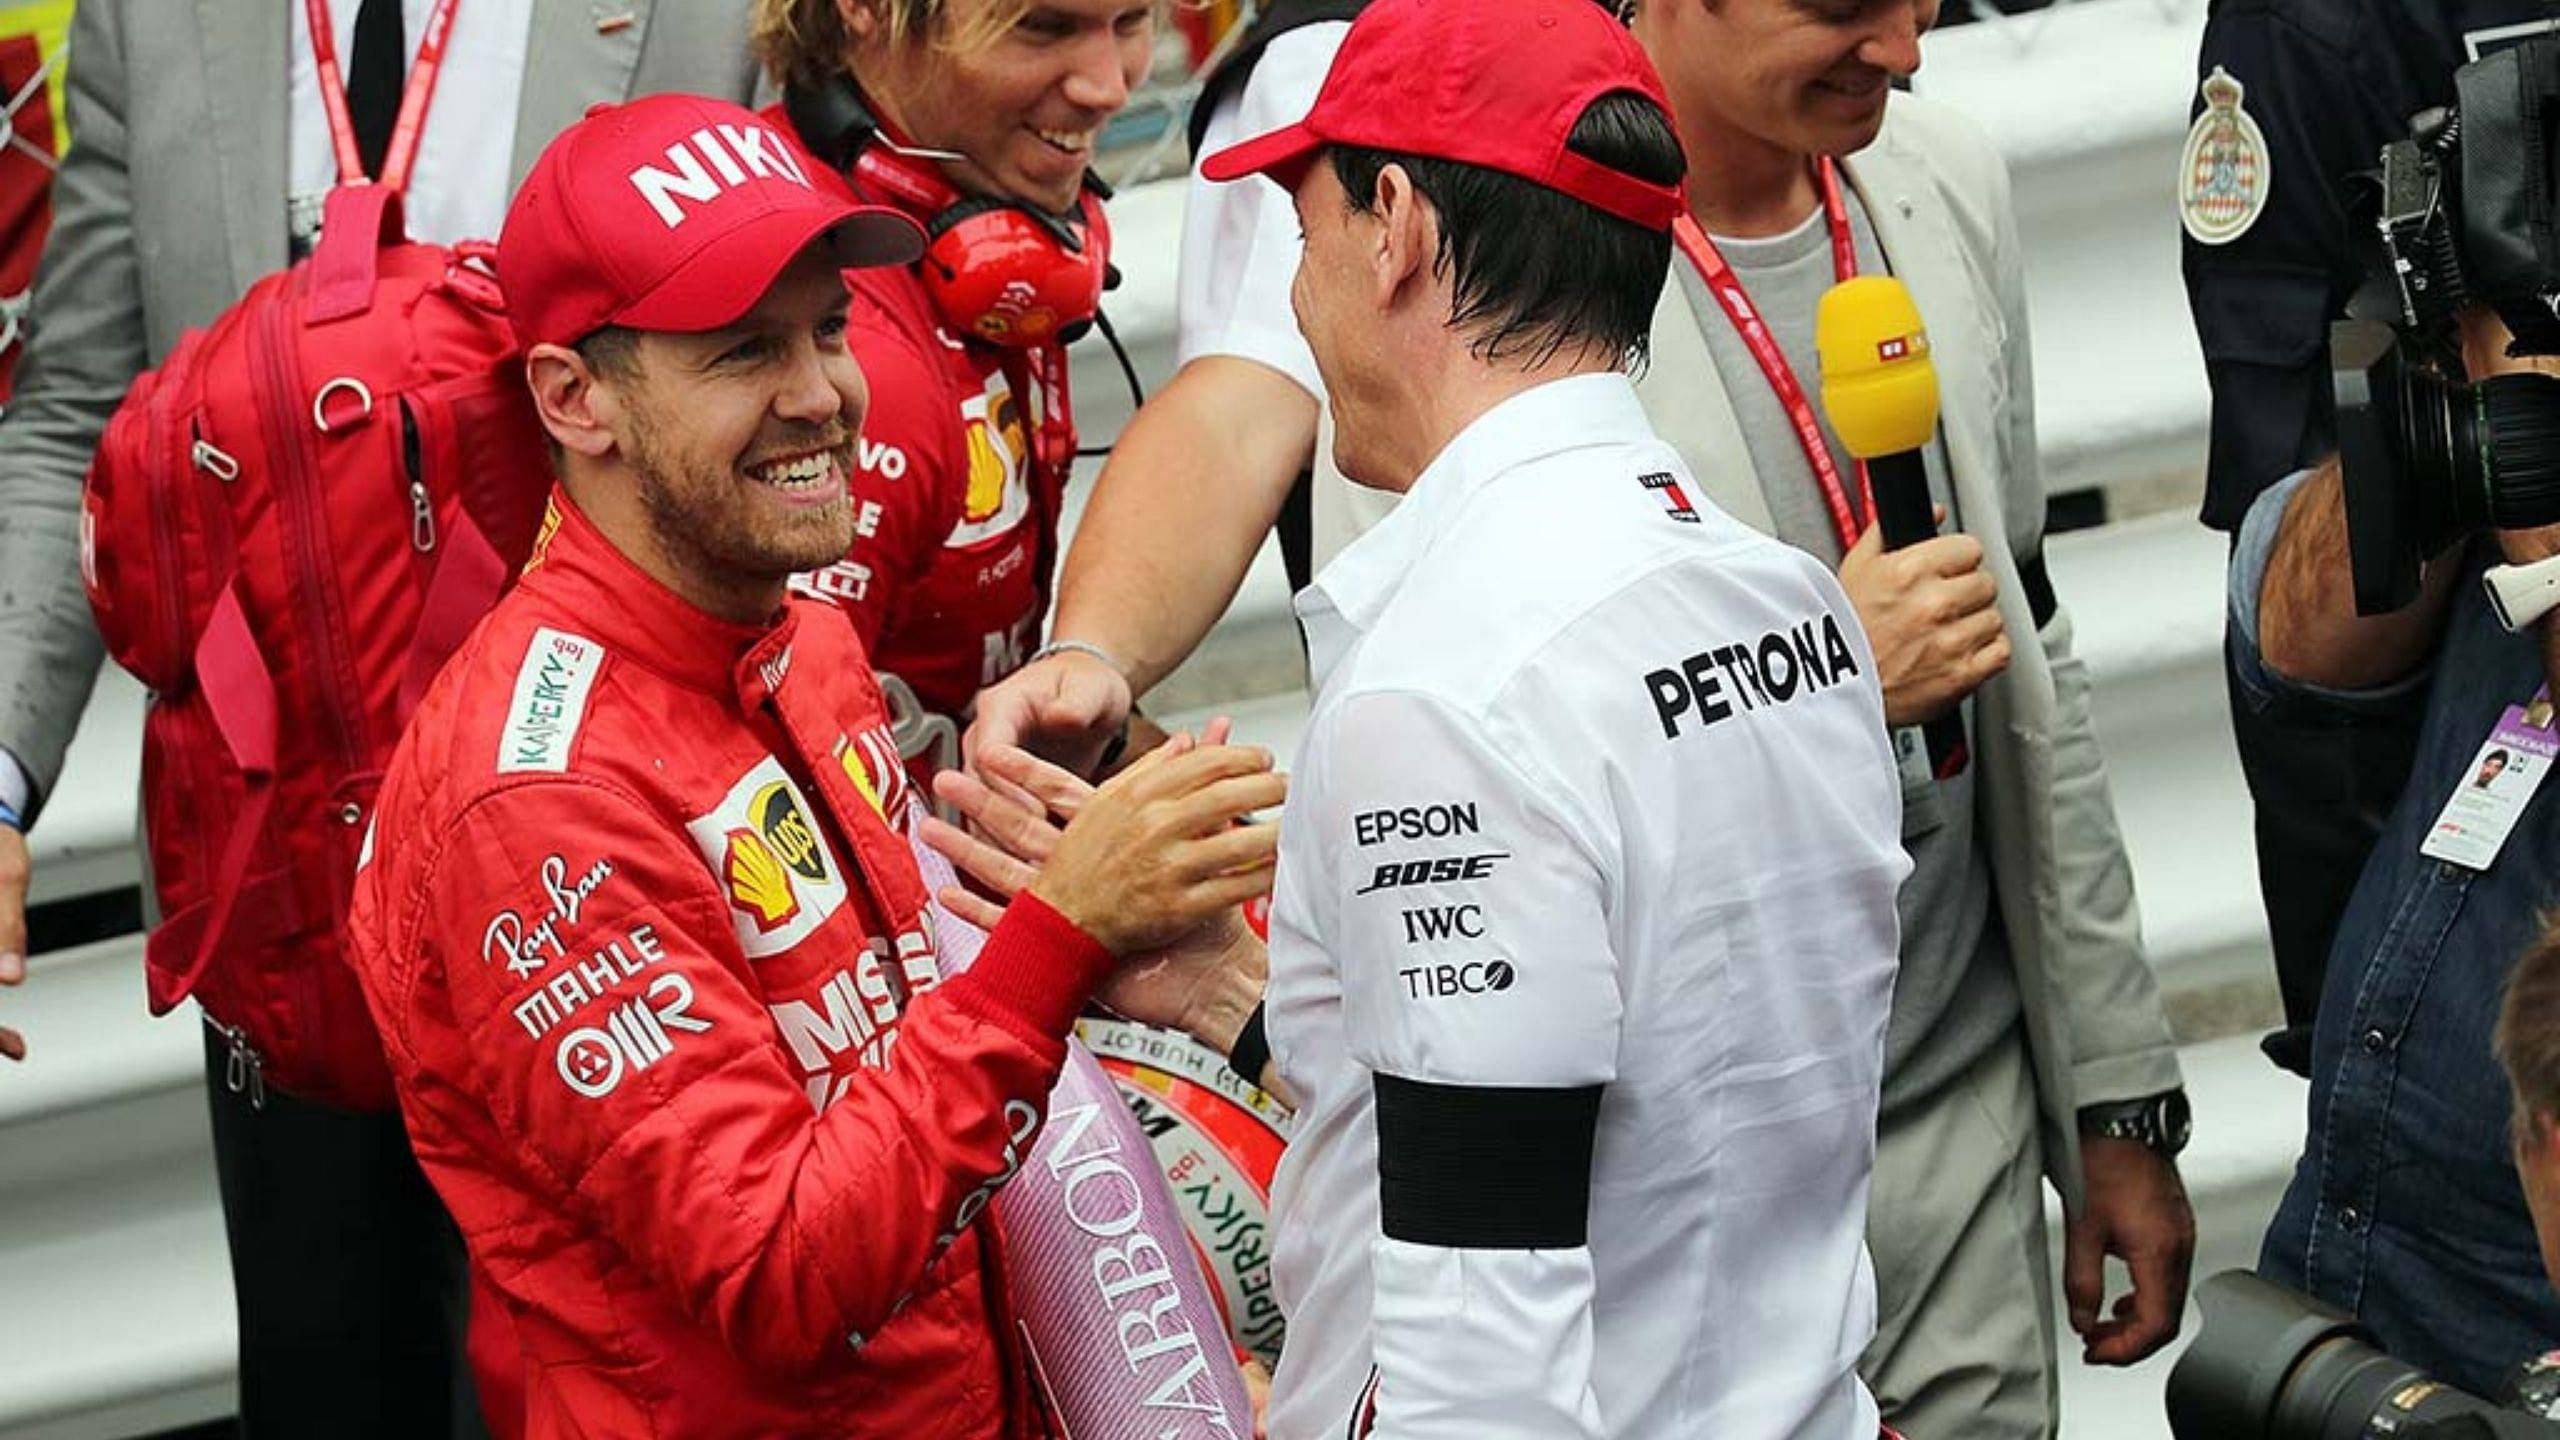 Sebastian Vettel to Mercedes: "If I had the chance to drive a Mercedes myself, I wouldn't say no"